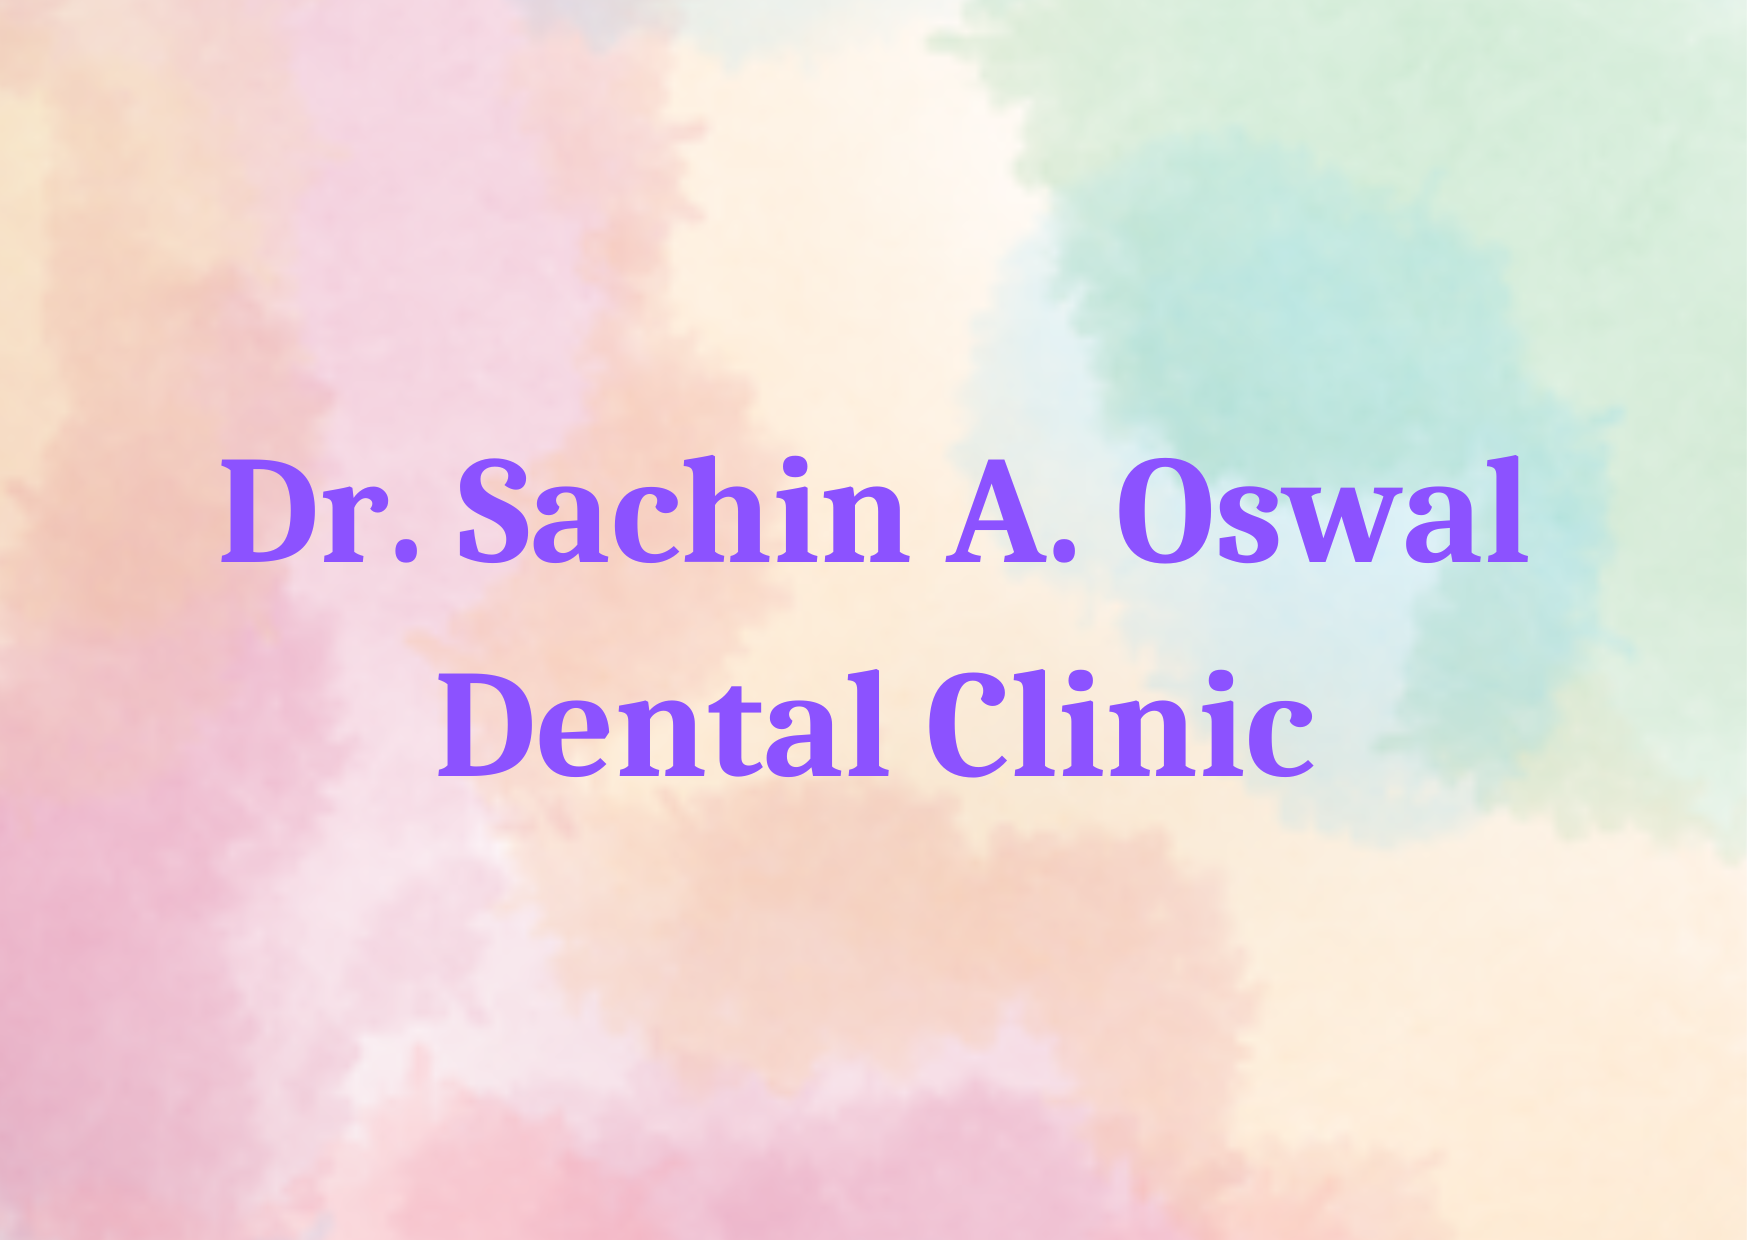 Dr. Sachin A. Oswal Dental Clinic 